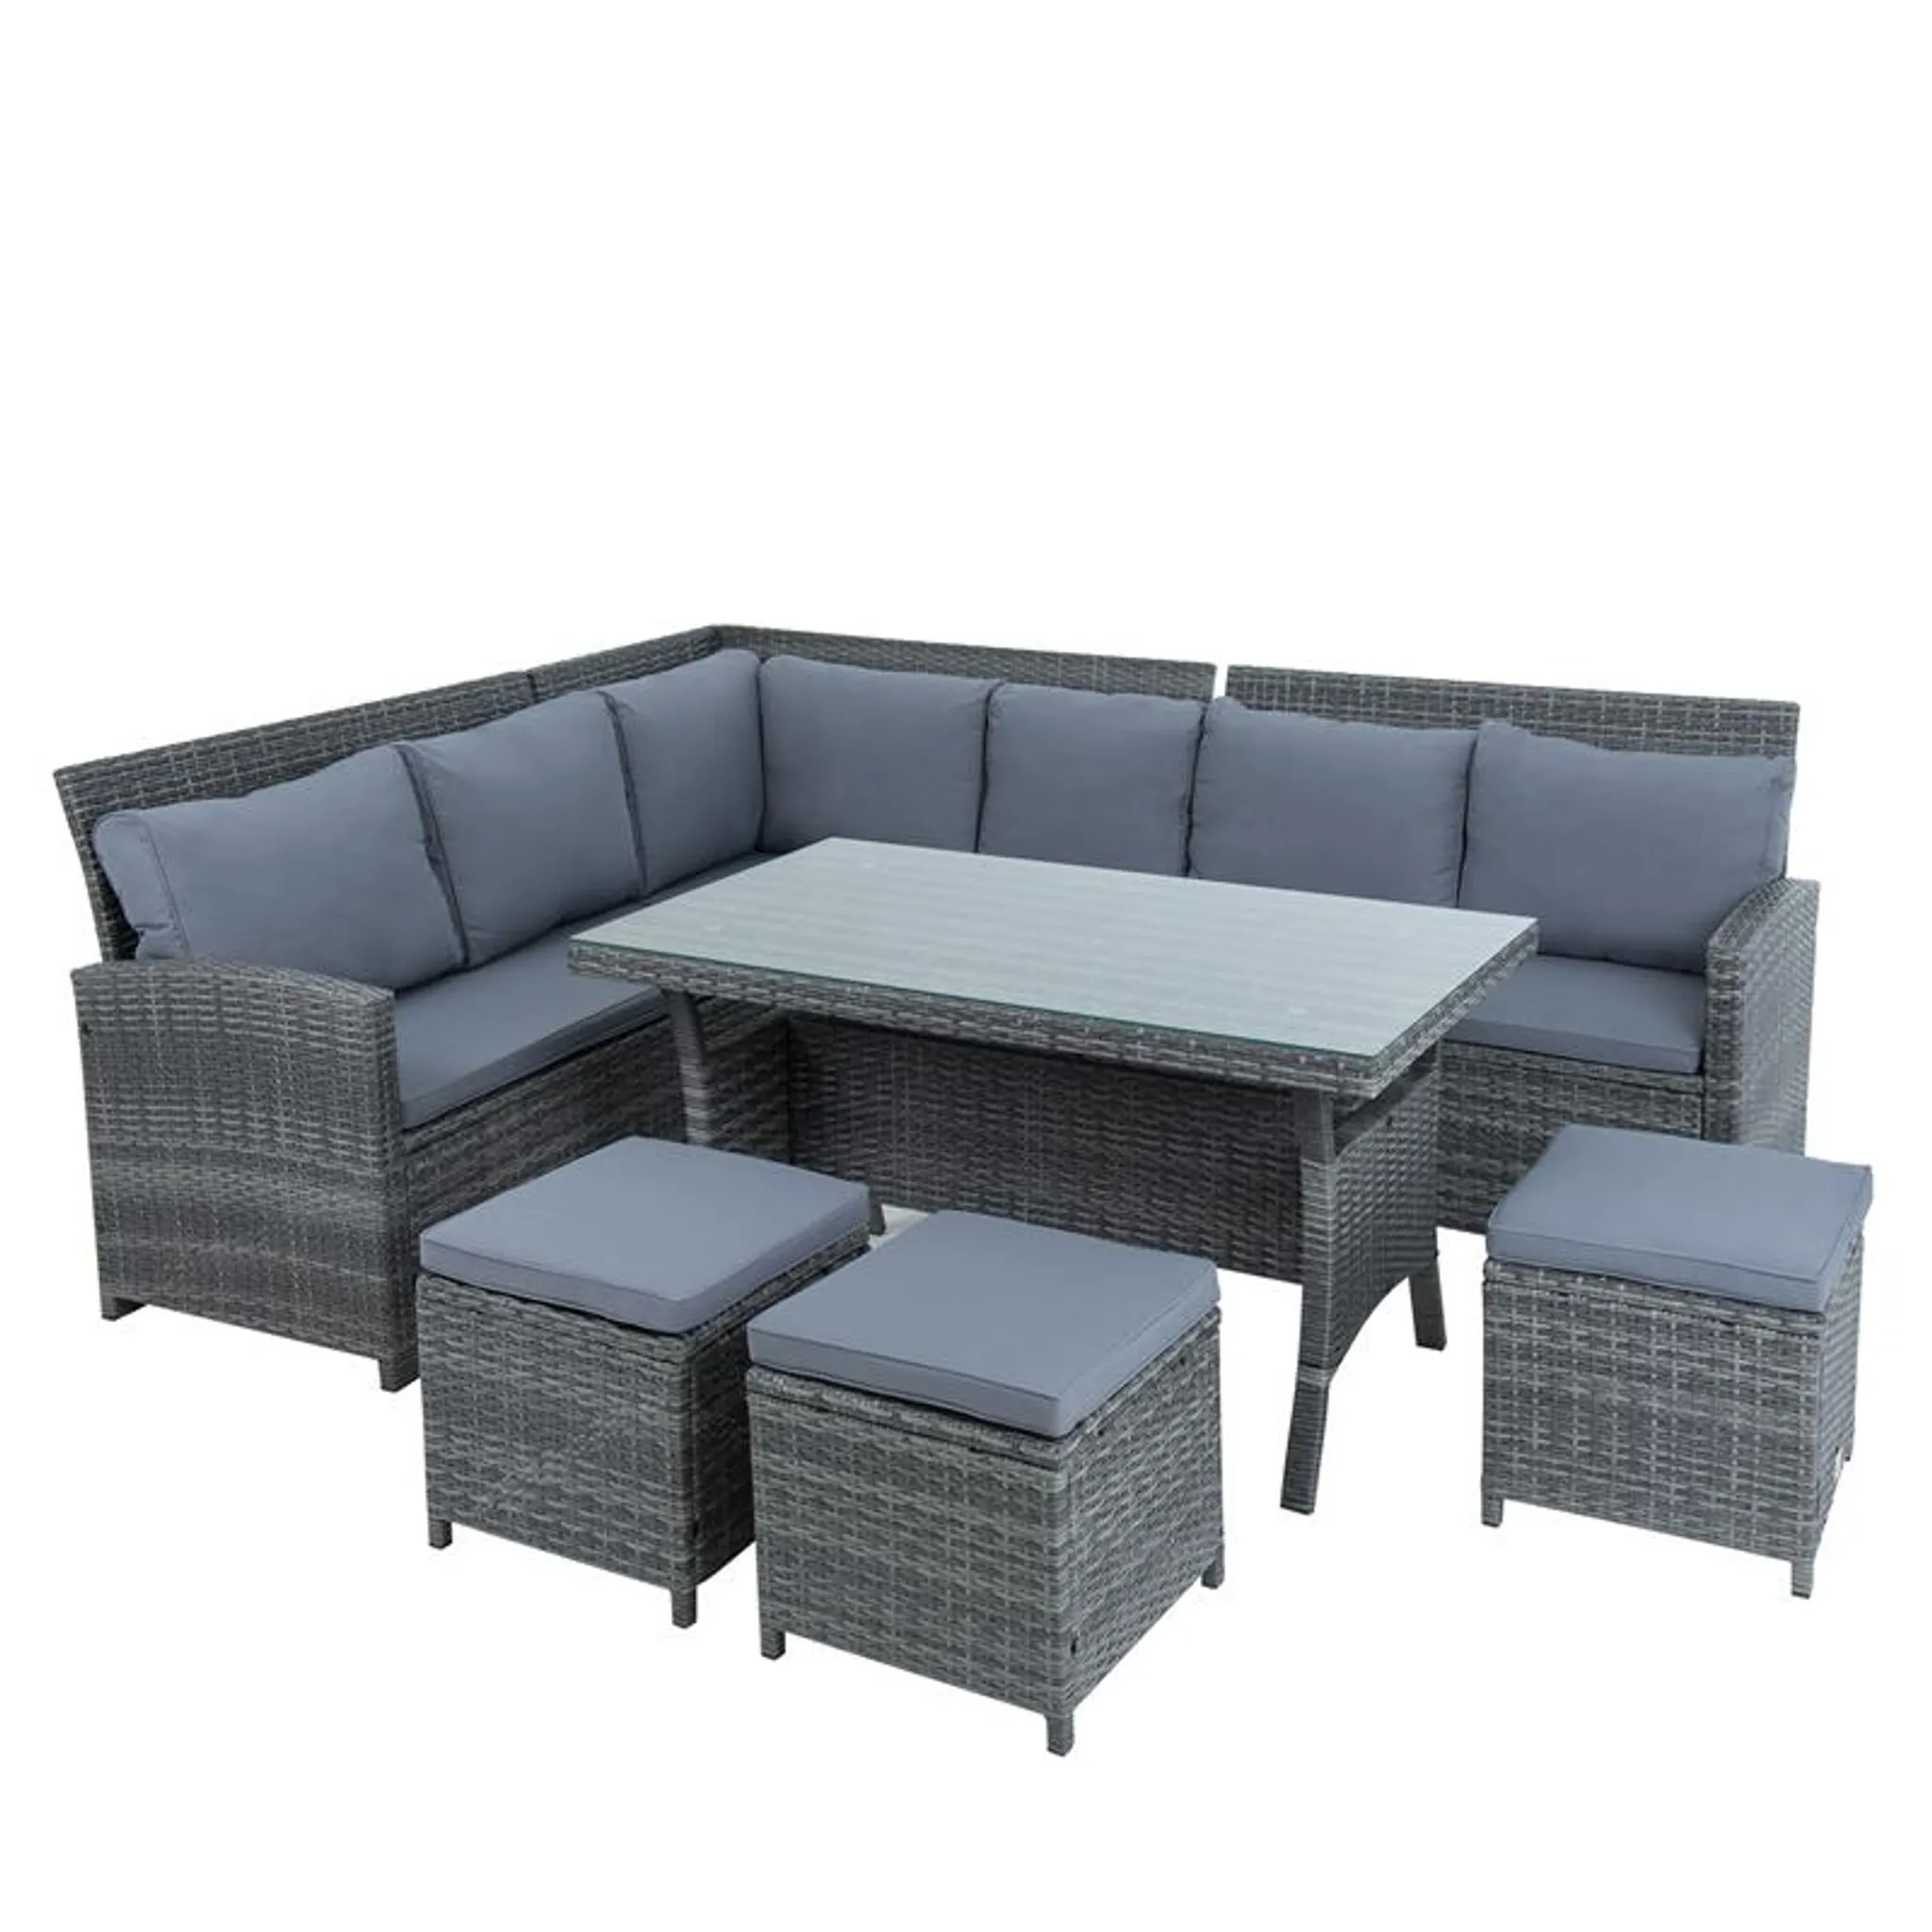 1 x Doppelsofa Links Sessel Sofa Tisch Hocker/frei erweiterbar! Enjoy Fit Polyrattan Gartenmöbel Sitzgruppe Lounge Sitzgarnitur inkl 